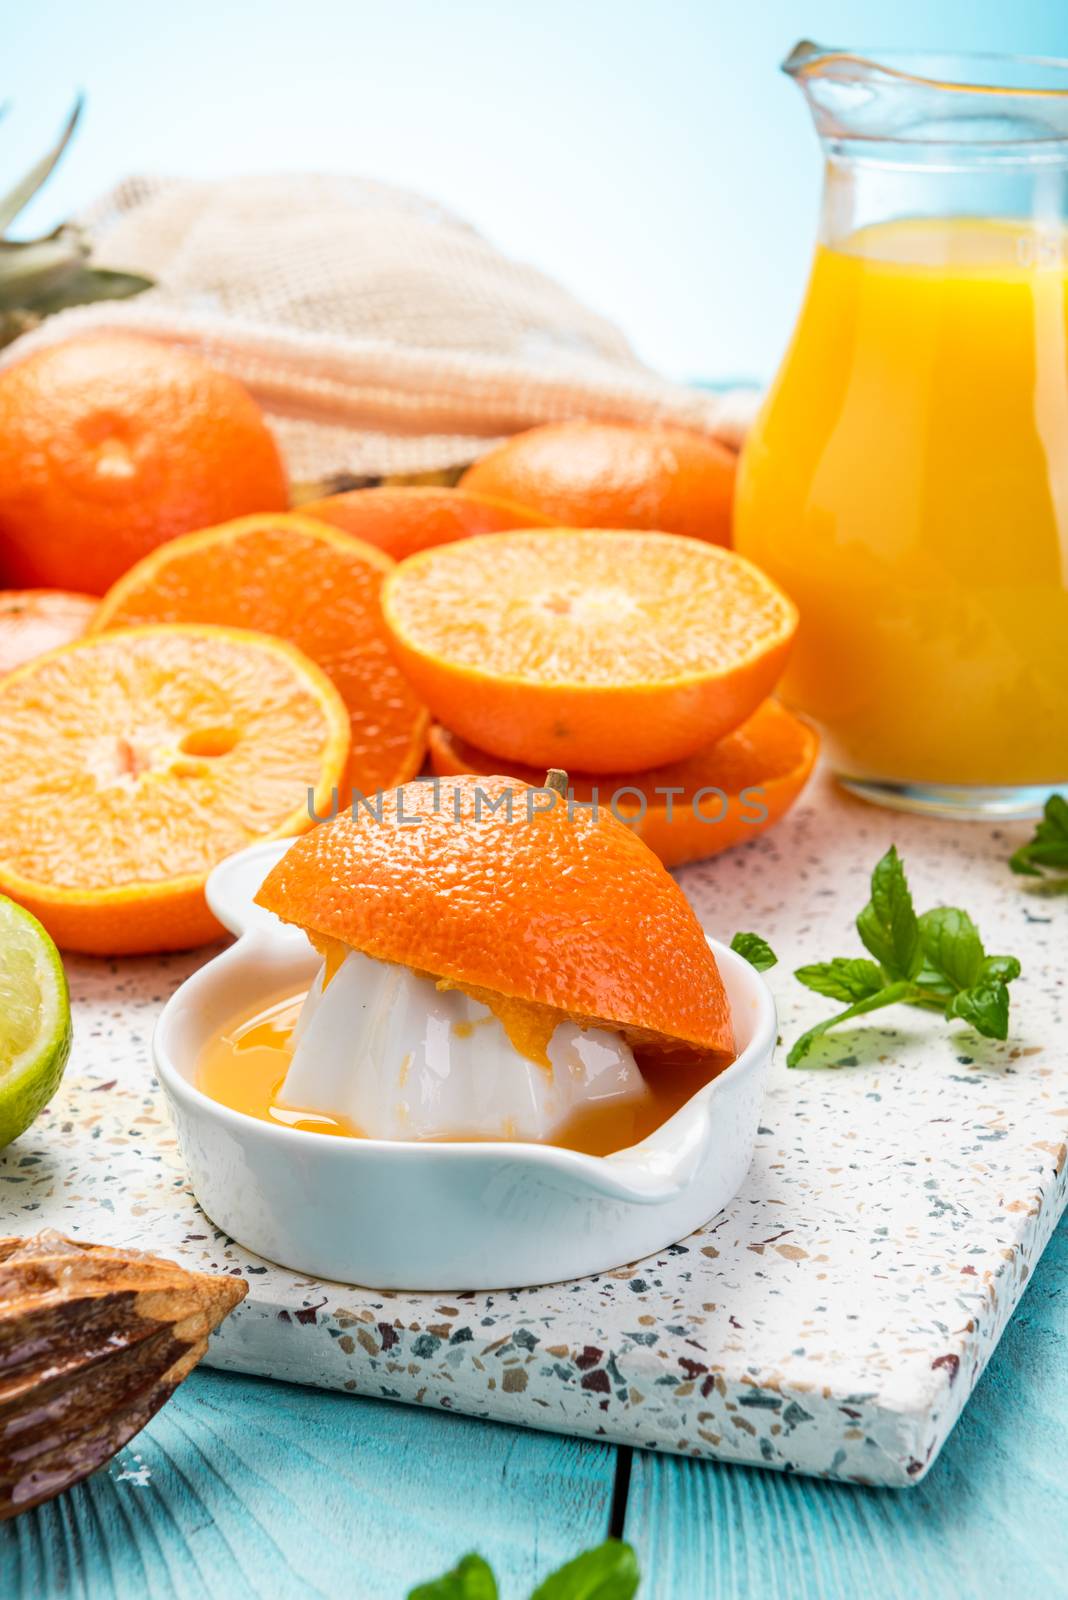 Homemade Healthy Orange Juice. Making Refreshing Healthy Beverage at Home.